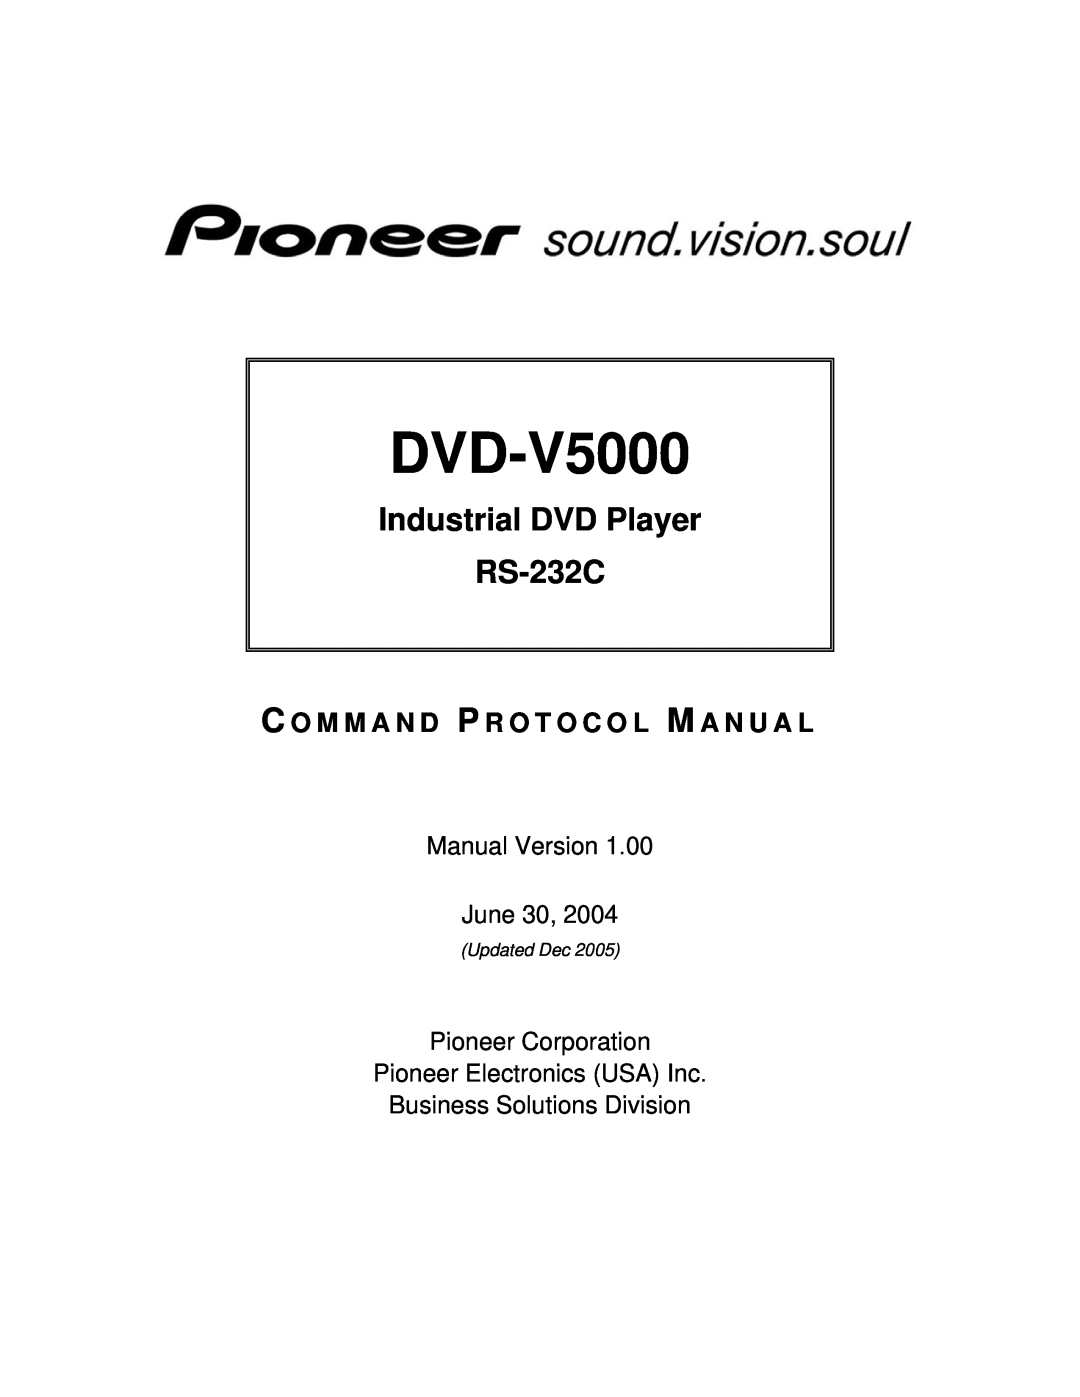 Pioneer RS-232C manual Manual Version June 30, Pioneer Corporation Pioneer Electronics USA Inc, DVD-V5000 